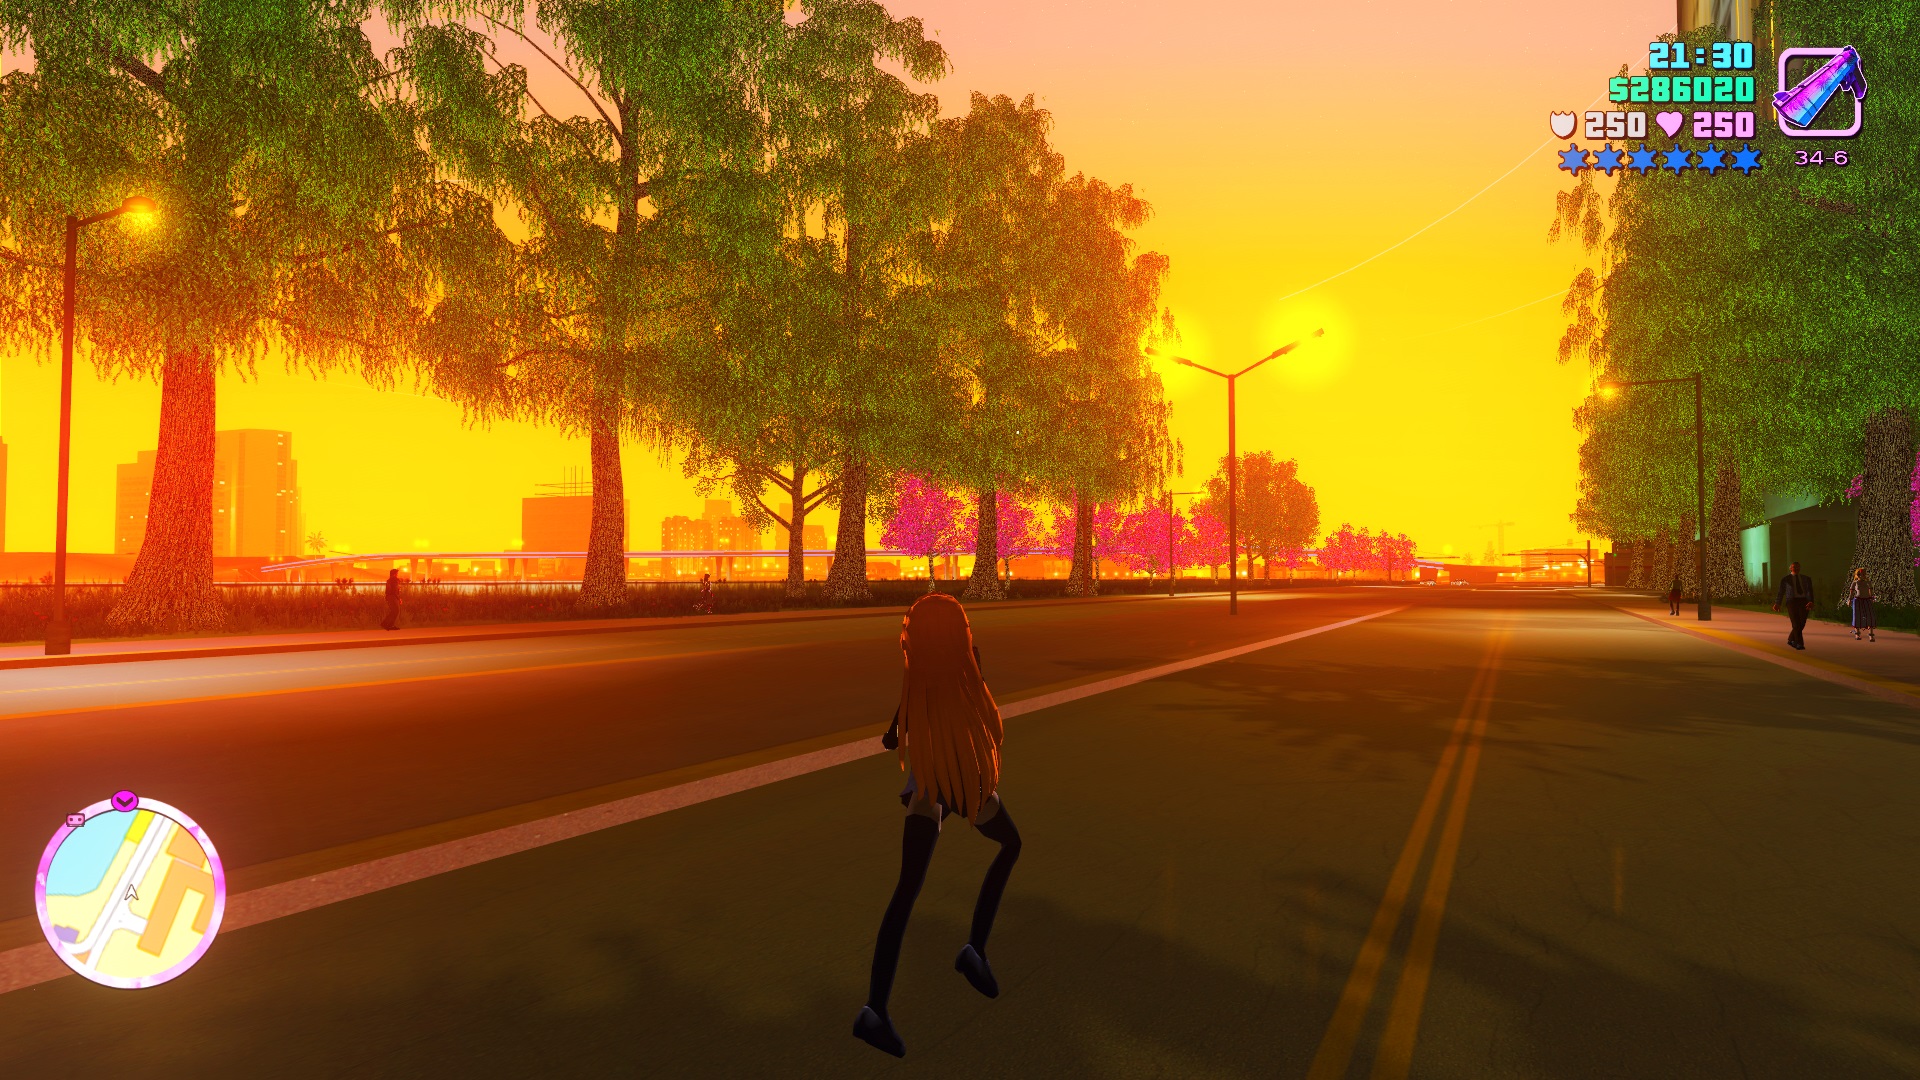 Image 7  GTA Japanese Anime Overdose  Vice City Mod for Grand Theft